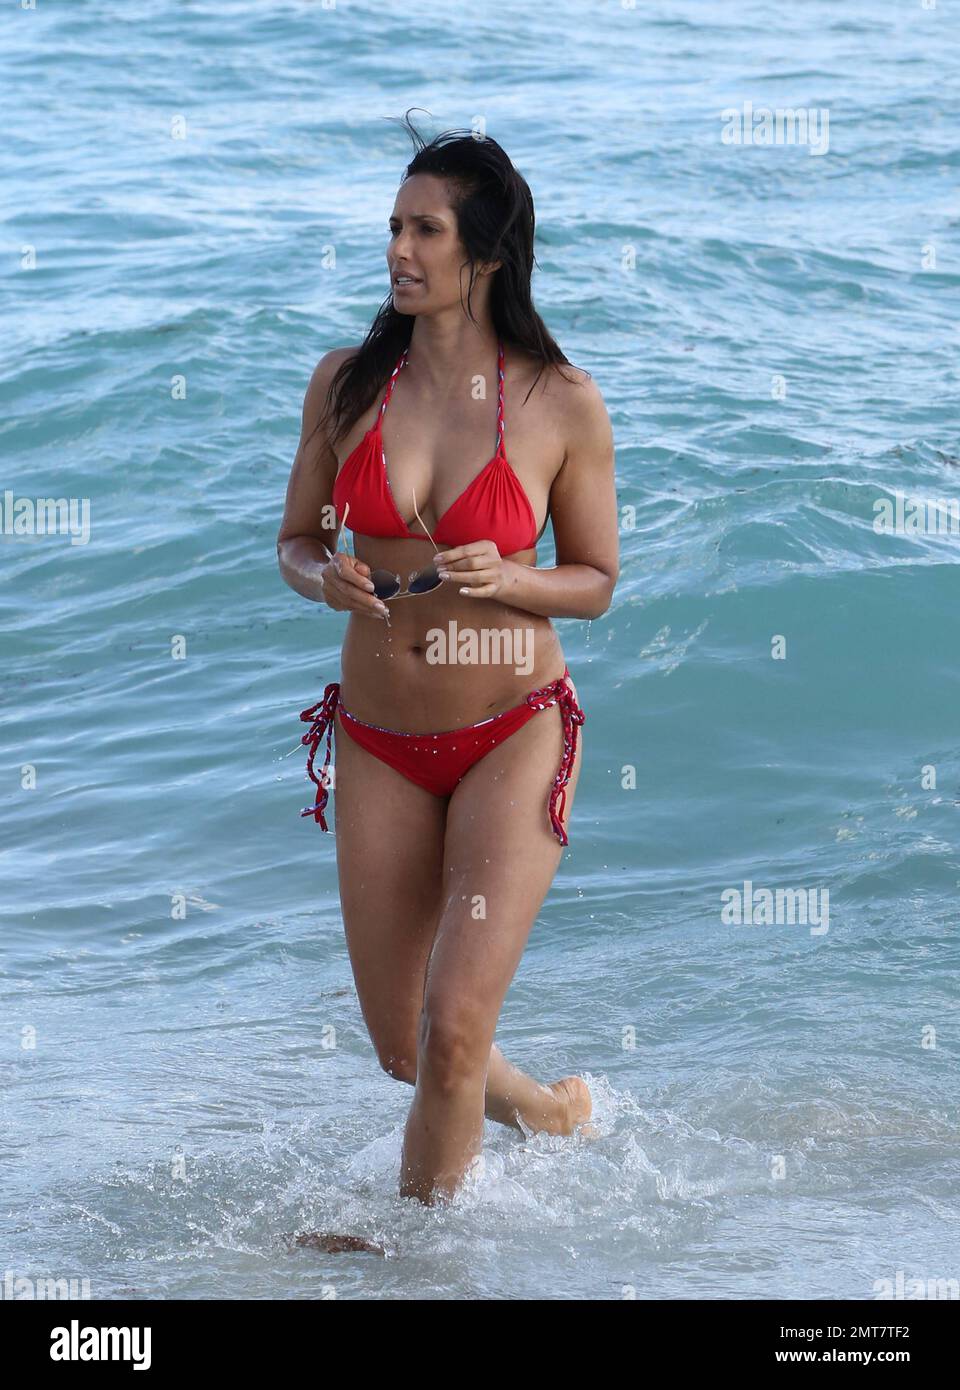 https://c8.alamy.com/comp/2MT7TF2/padma-lakshmi-looks-stunning-in-a-red-string-bikini-as-she-takes-a-dip-in-the-miami-ocean-miami-beach-fl-february-8-2015-2MT7TF2.jpg